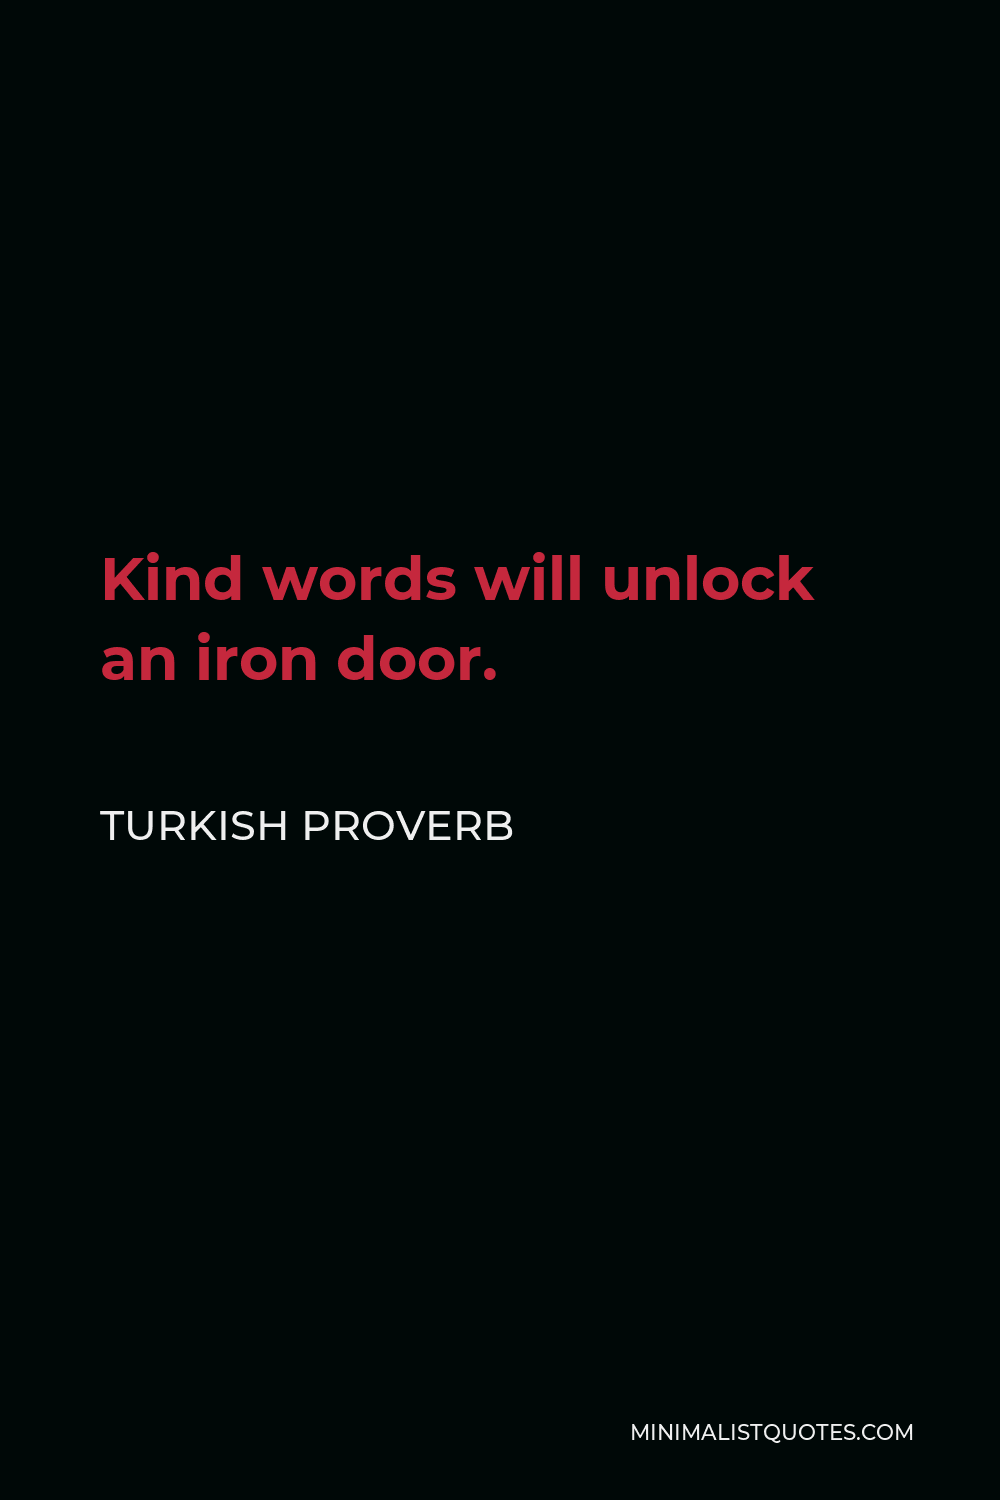 Turkish Proverb Quote - Kind words will unlock an iron door.